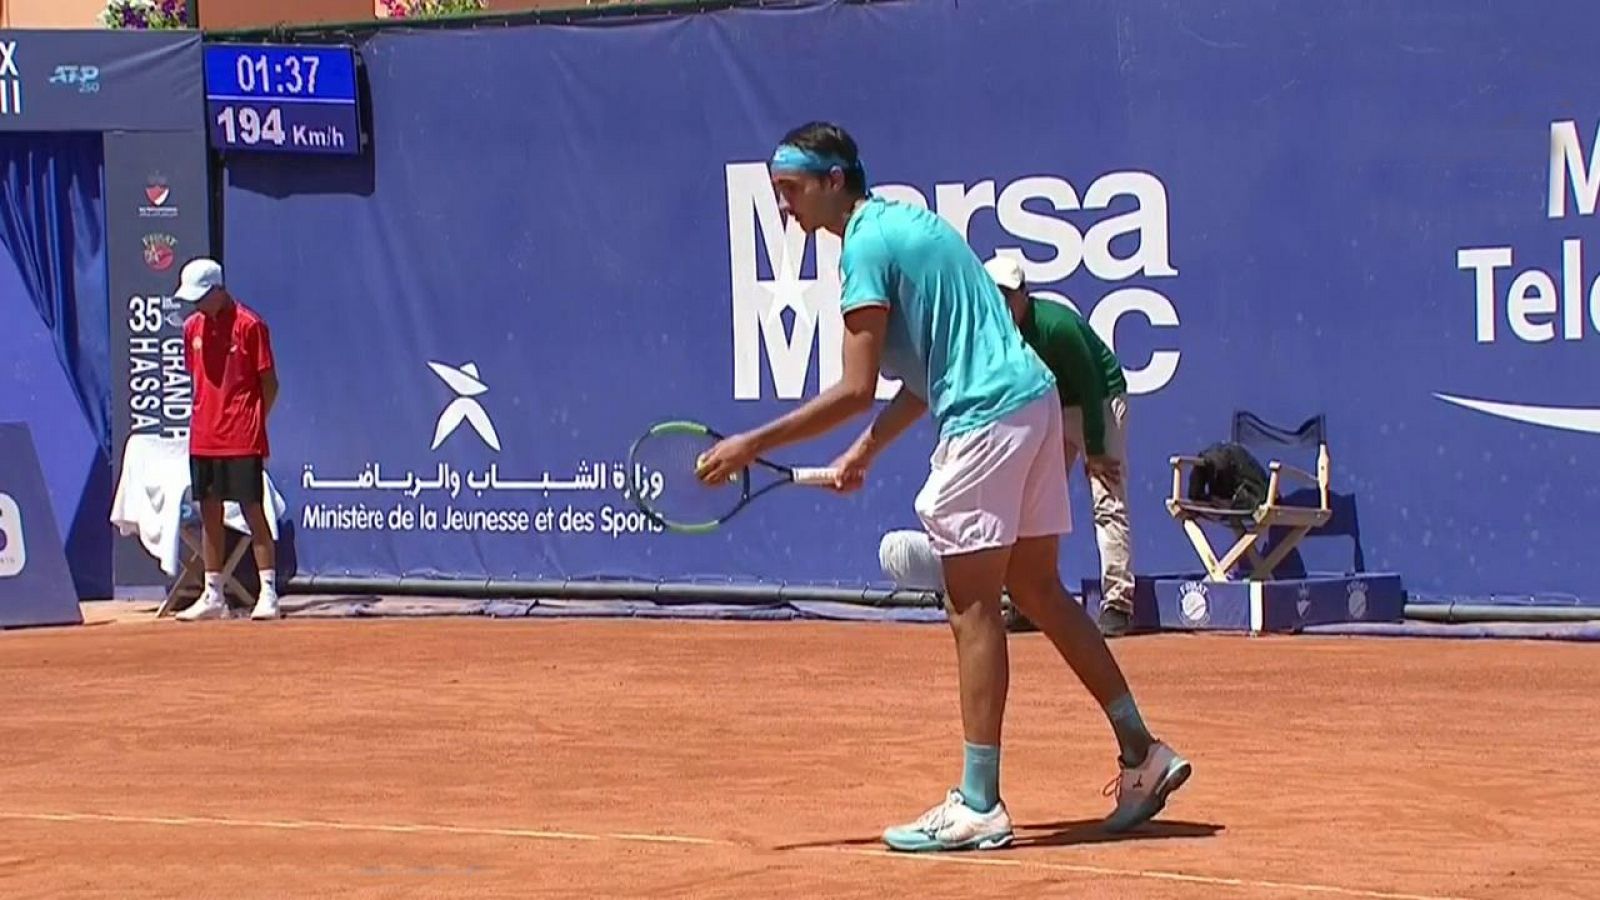 Tenis - ATP 250 Torneo Marrakech: R. Haase - L. Sonego